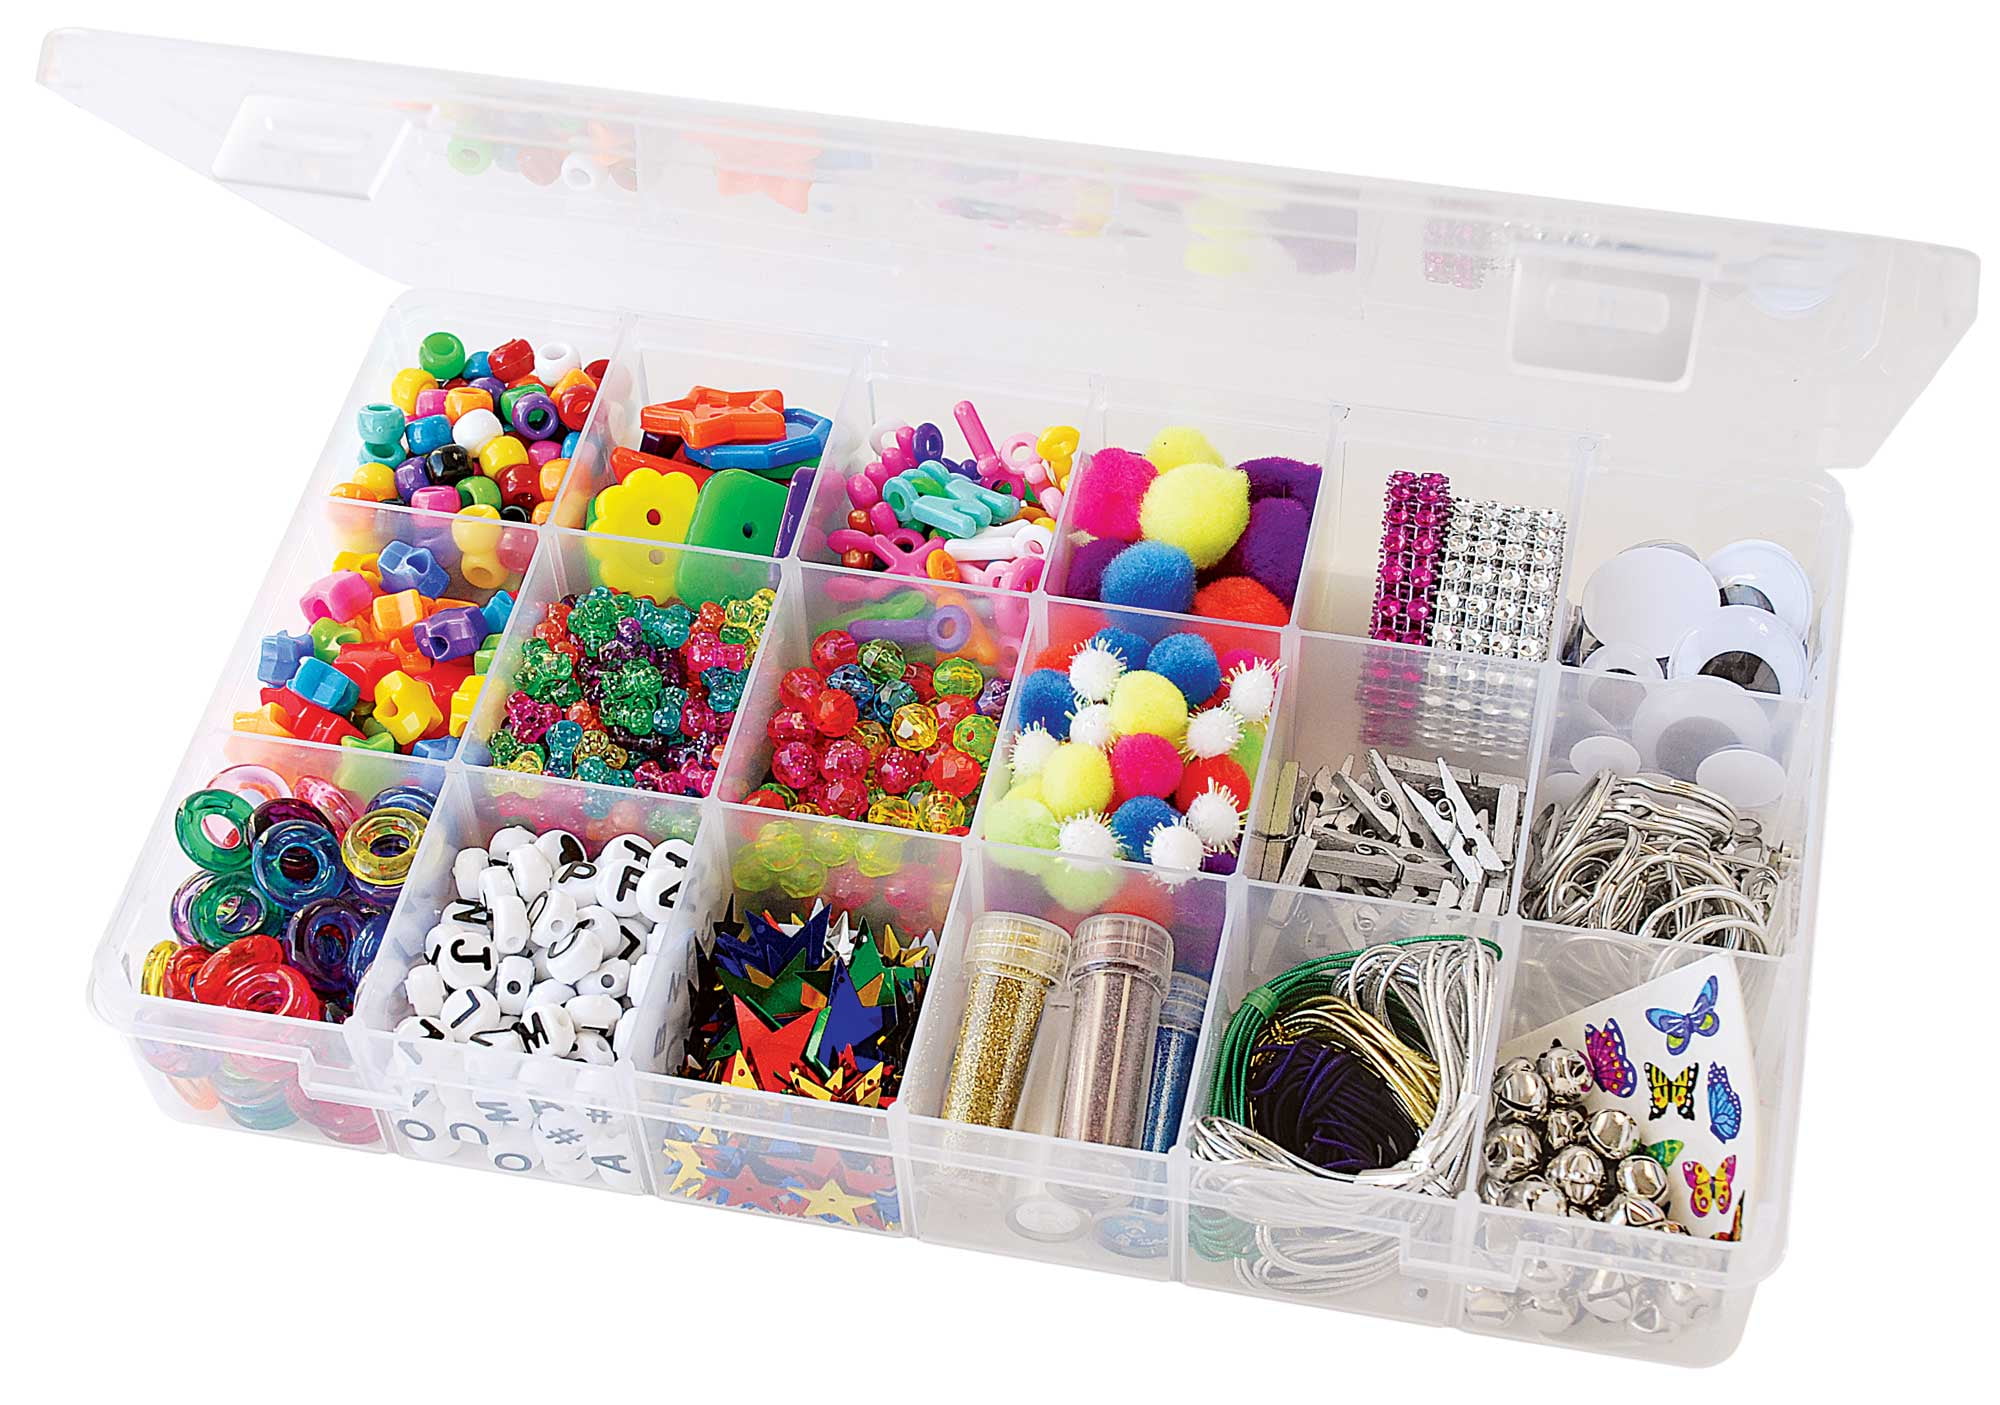 The Beadsmith® 18-Compartment Organizer Box